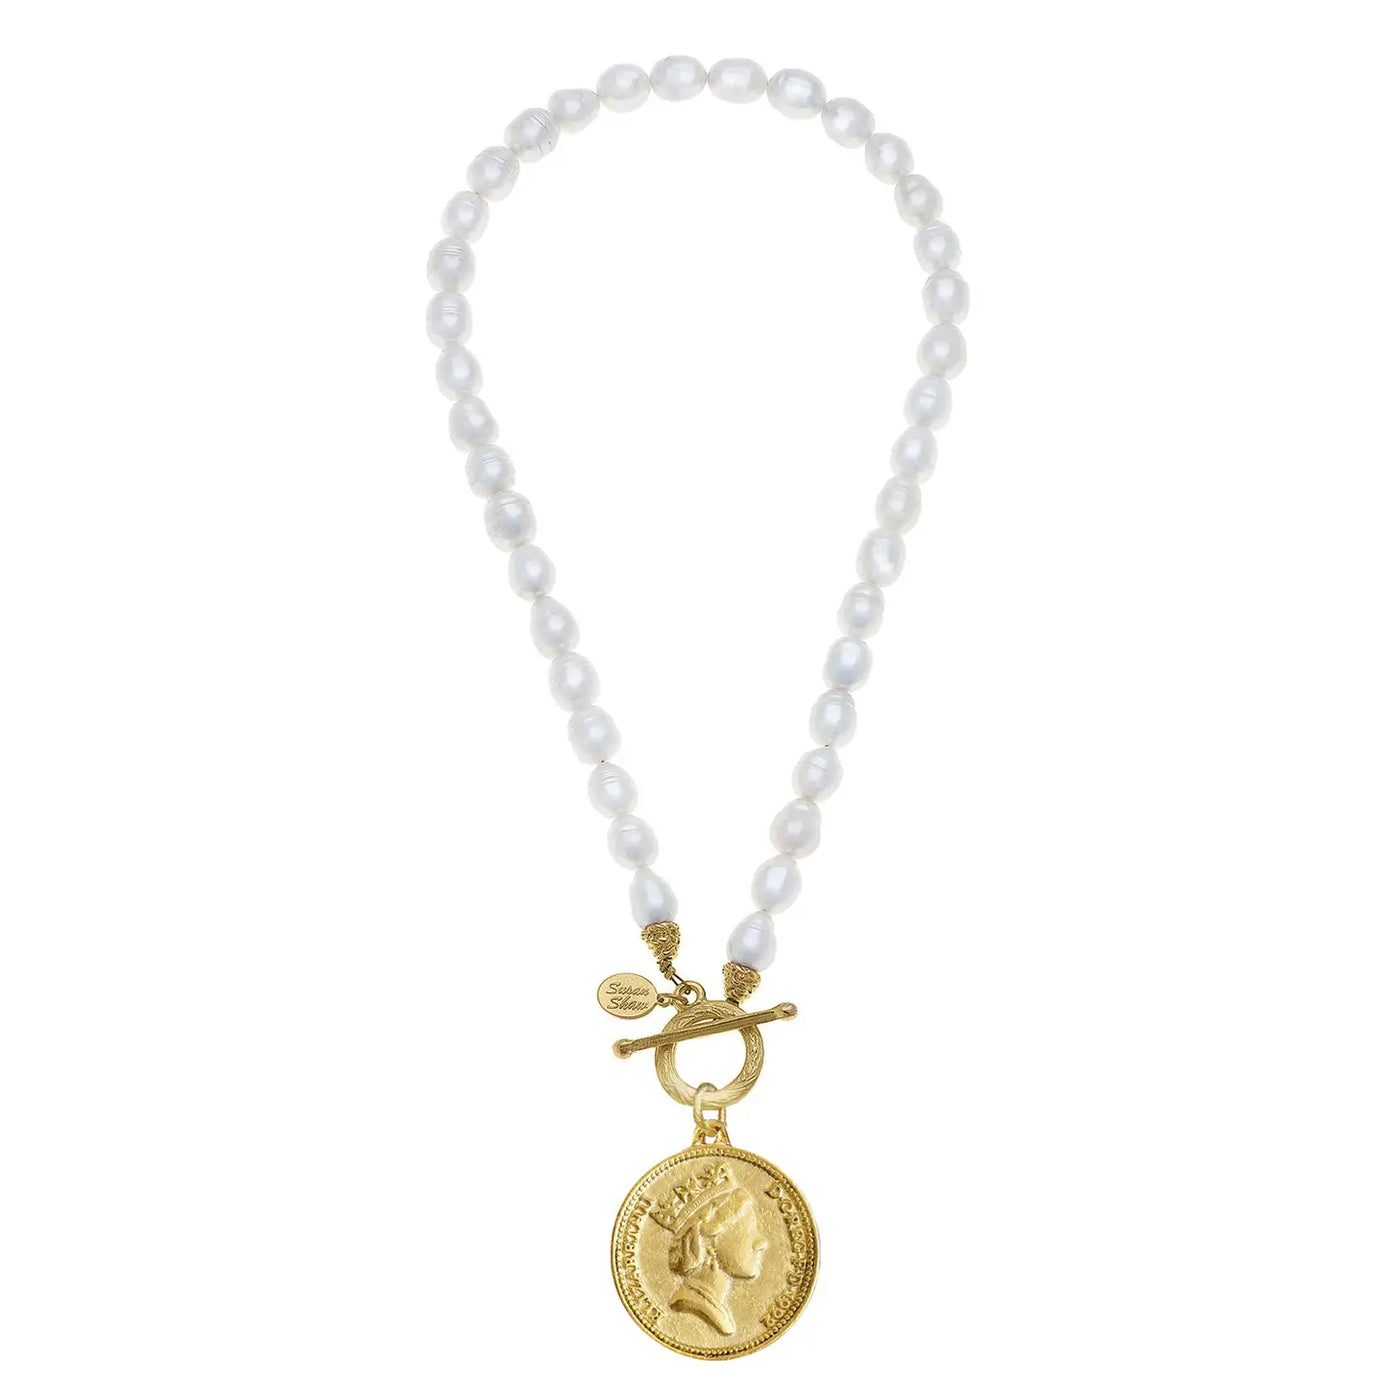 Queen Elizabeth Coin on Pearl Necklace